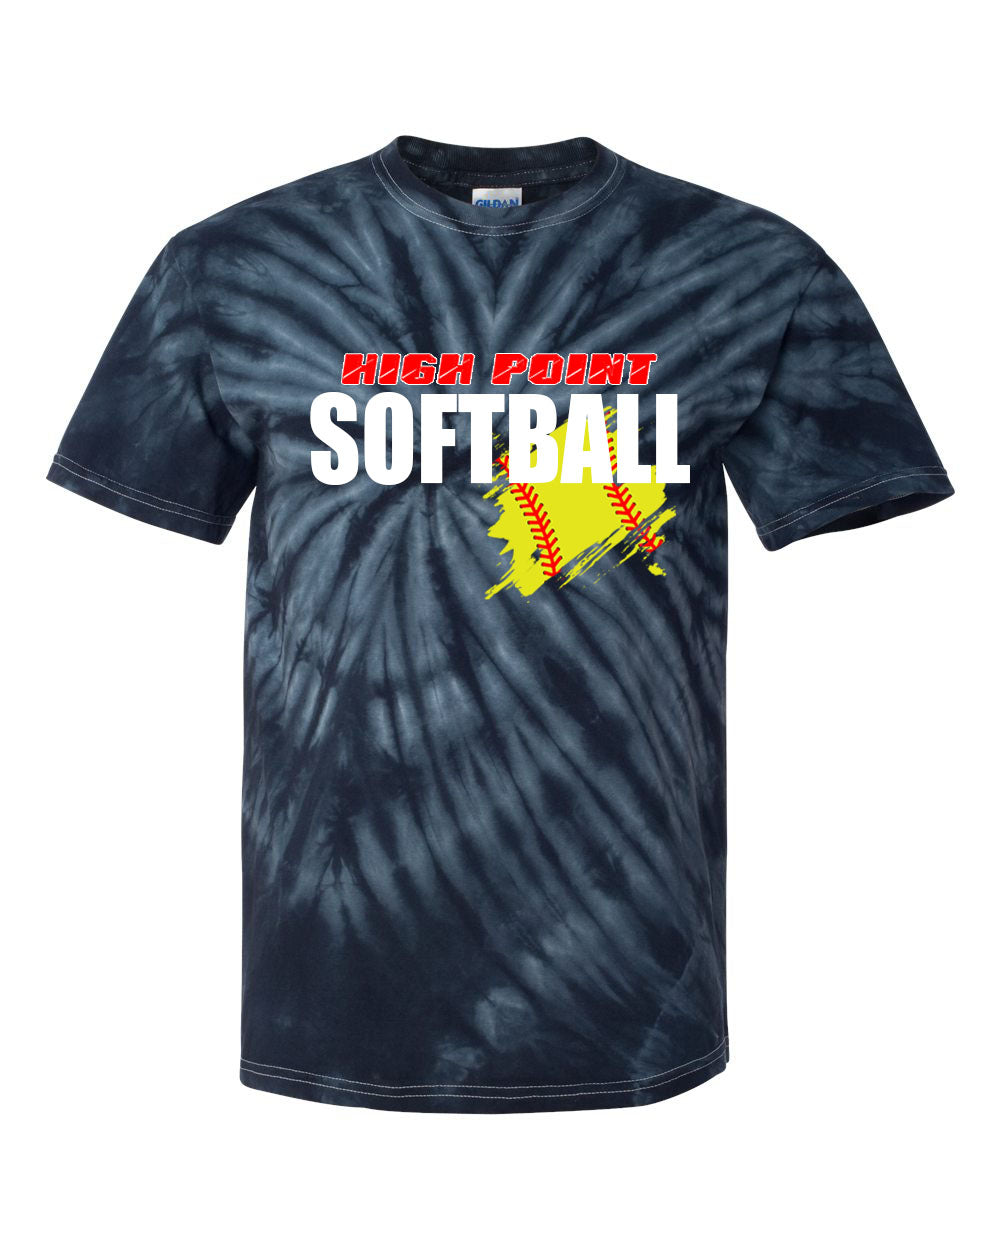 High Point Softball Tie Dye t-shirt Design 3